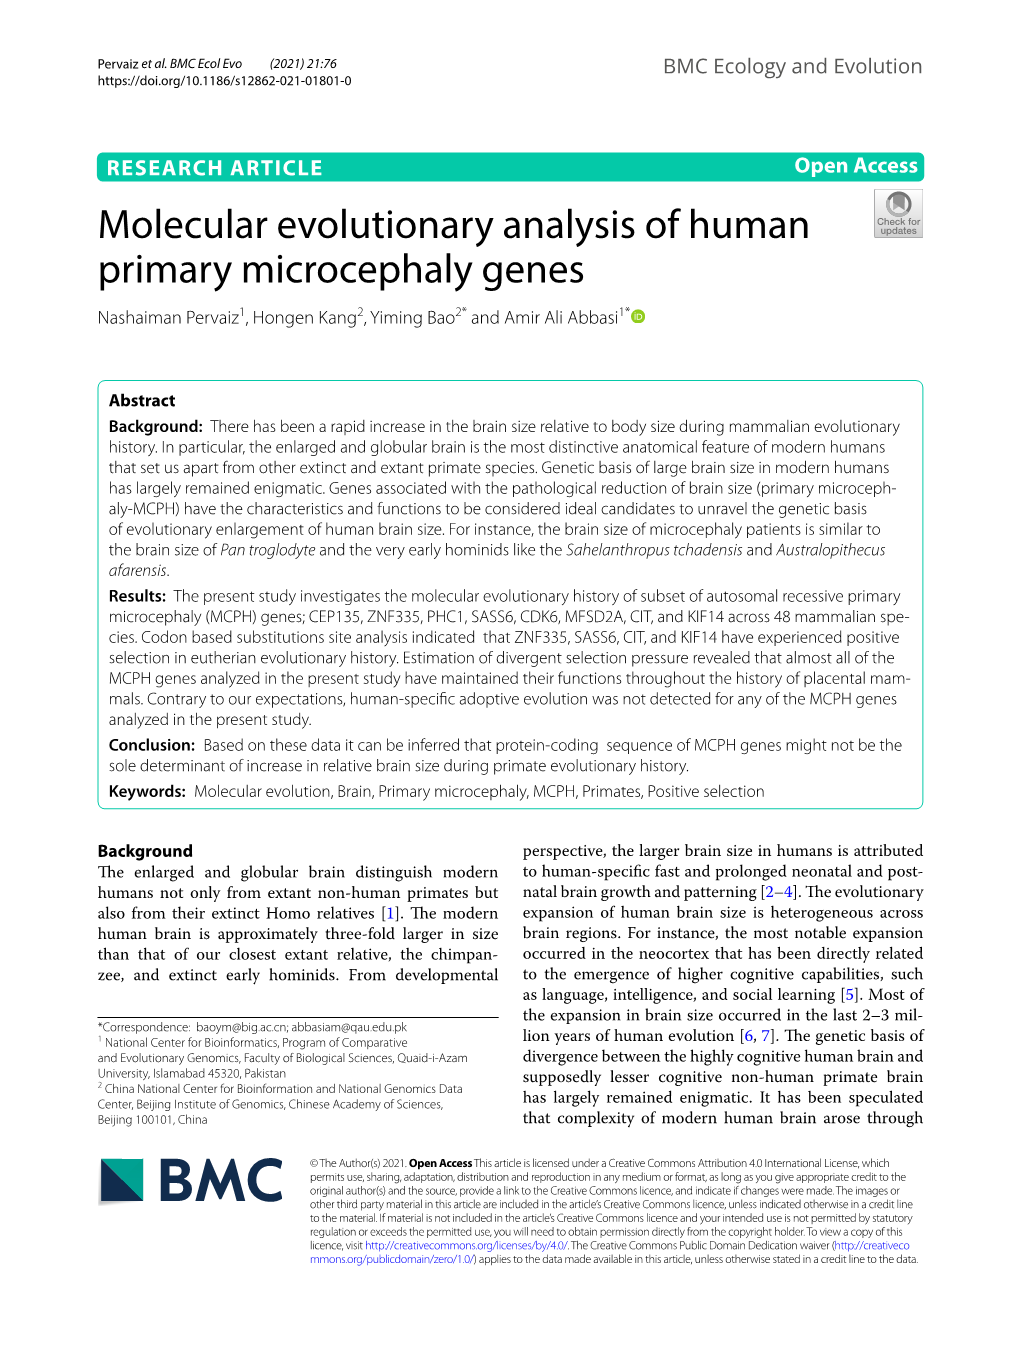 Molecular Evolutionary Analysis of Human Primary Microcephaly Genes Nashaiman Pervaiz1, Hongen Kang2, Yiming Bao2* and Amir Ali Abbasi1*